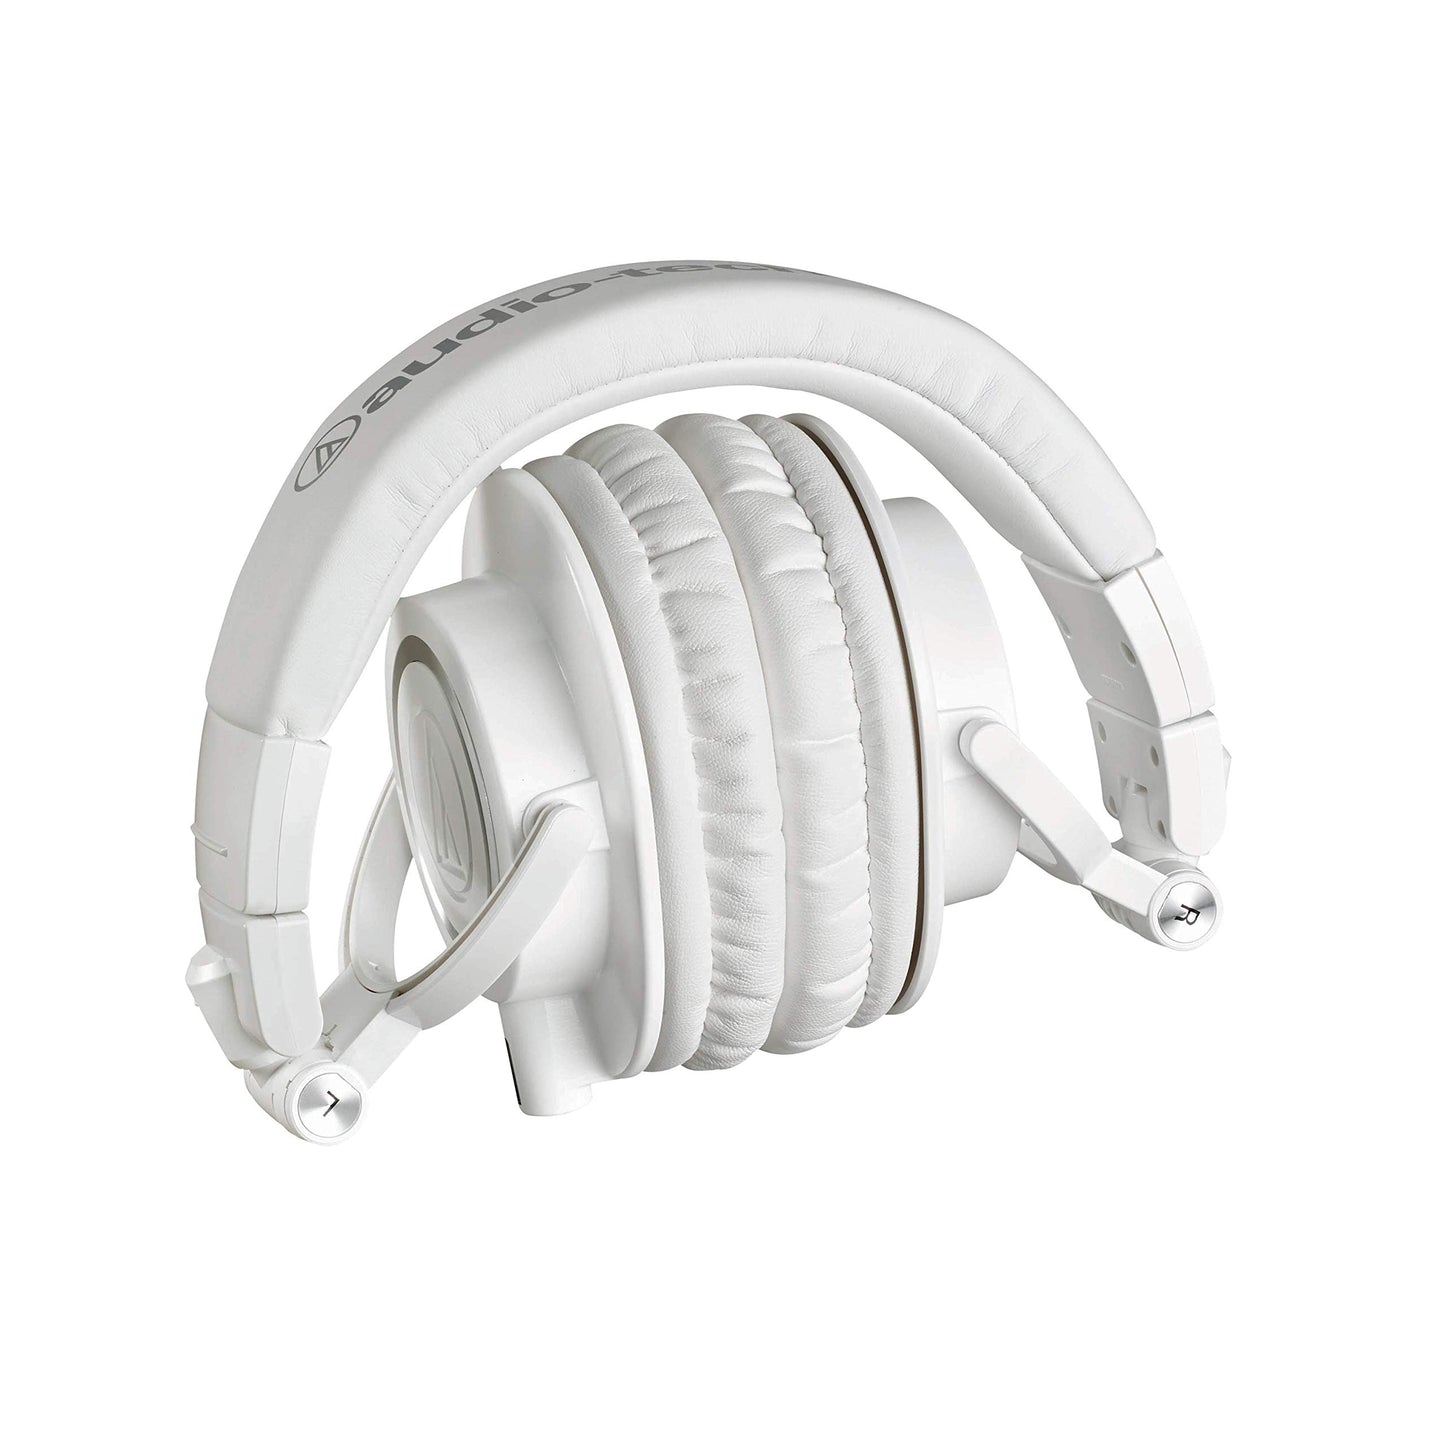 Audio-Technica ATH-M50XWH Professional Studio Monitor Headphones - White - Small